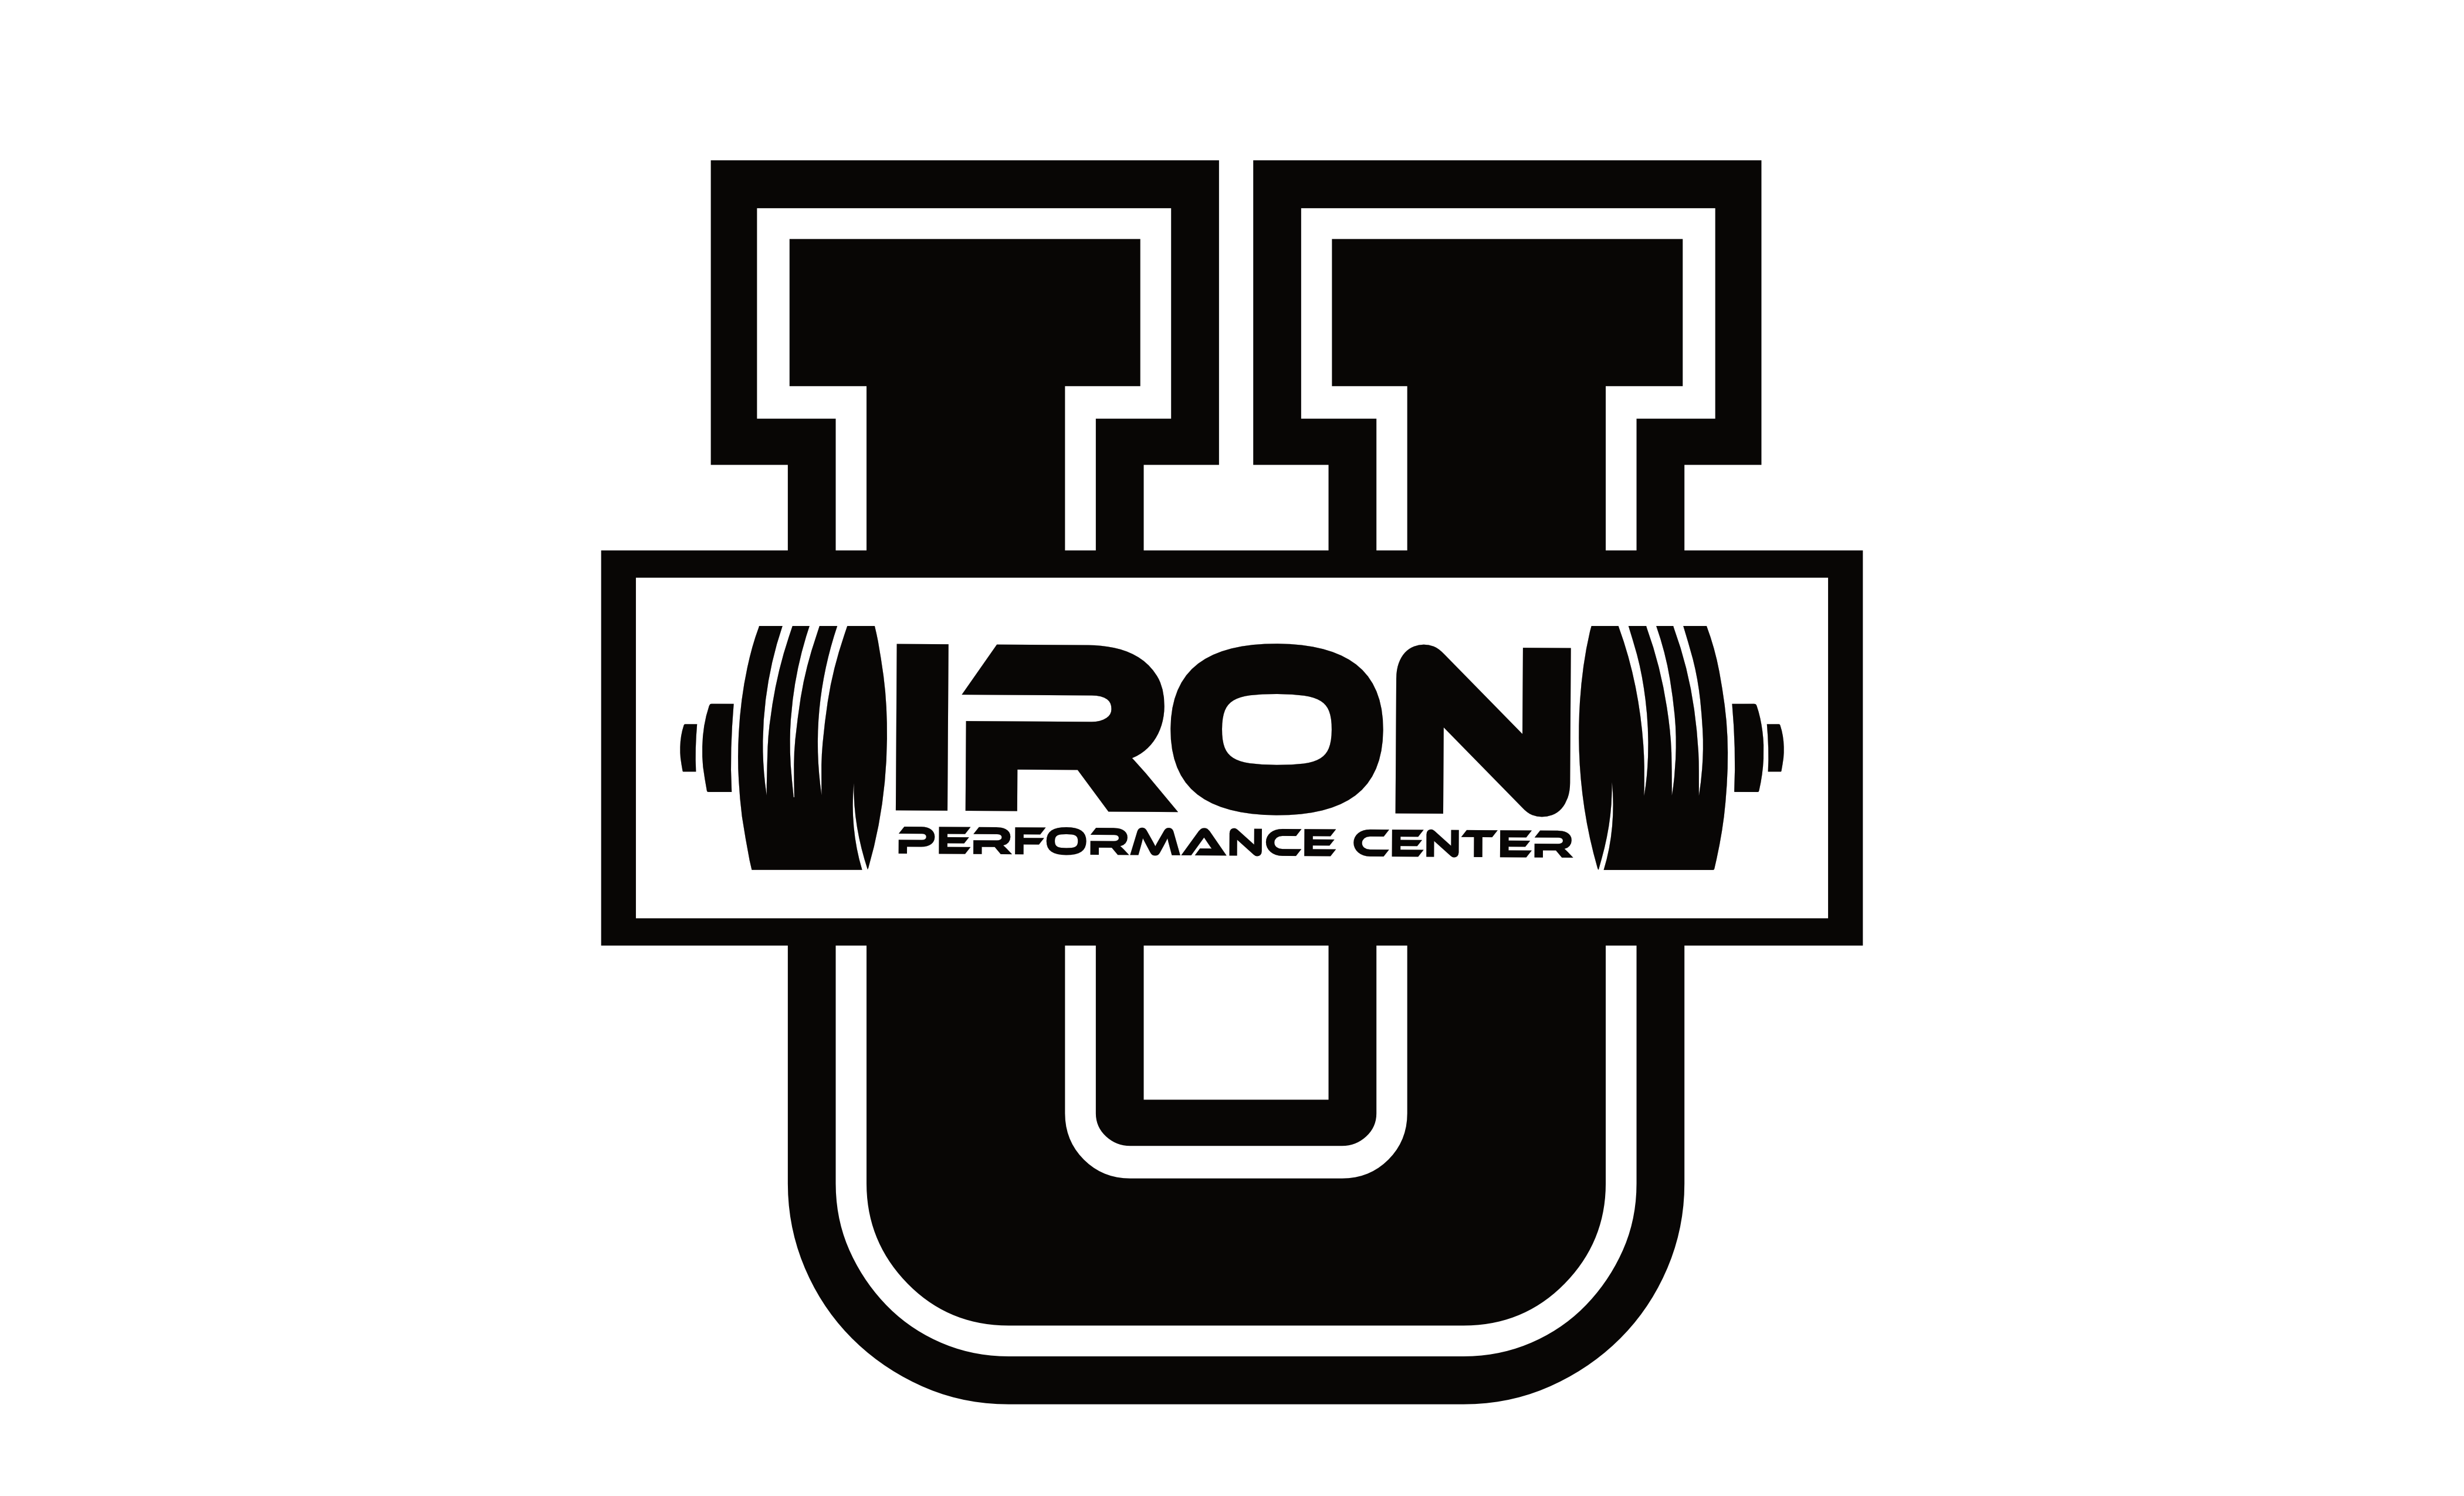 Iron Performance U